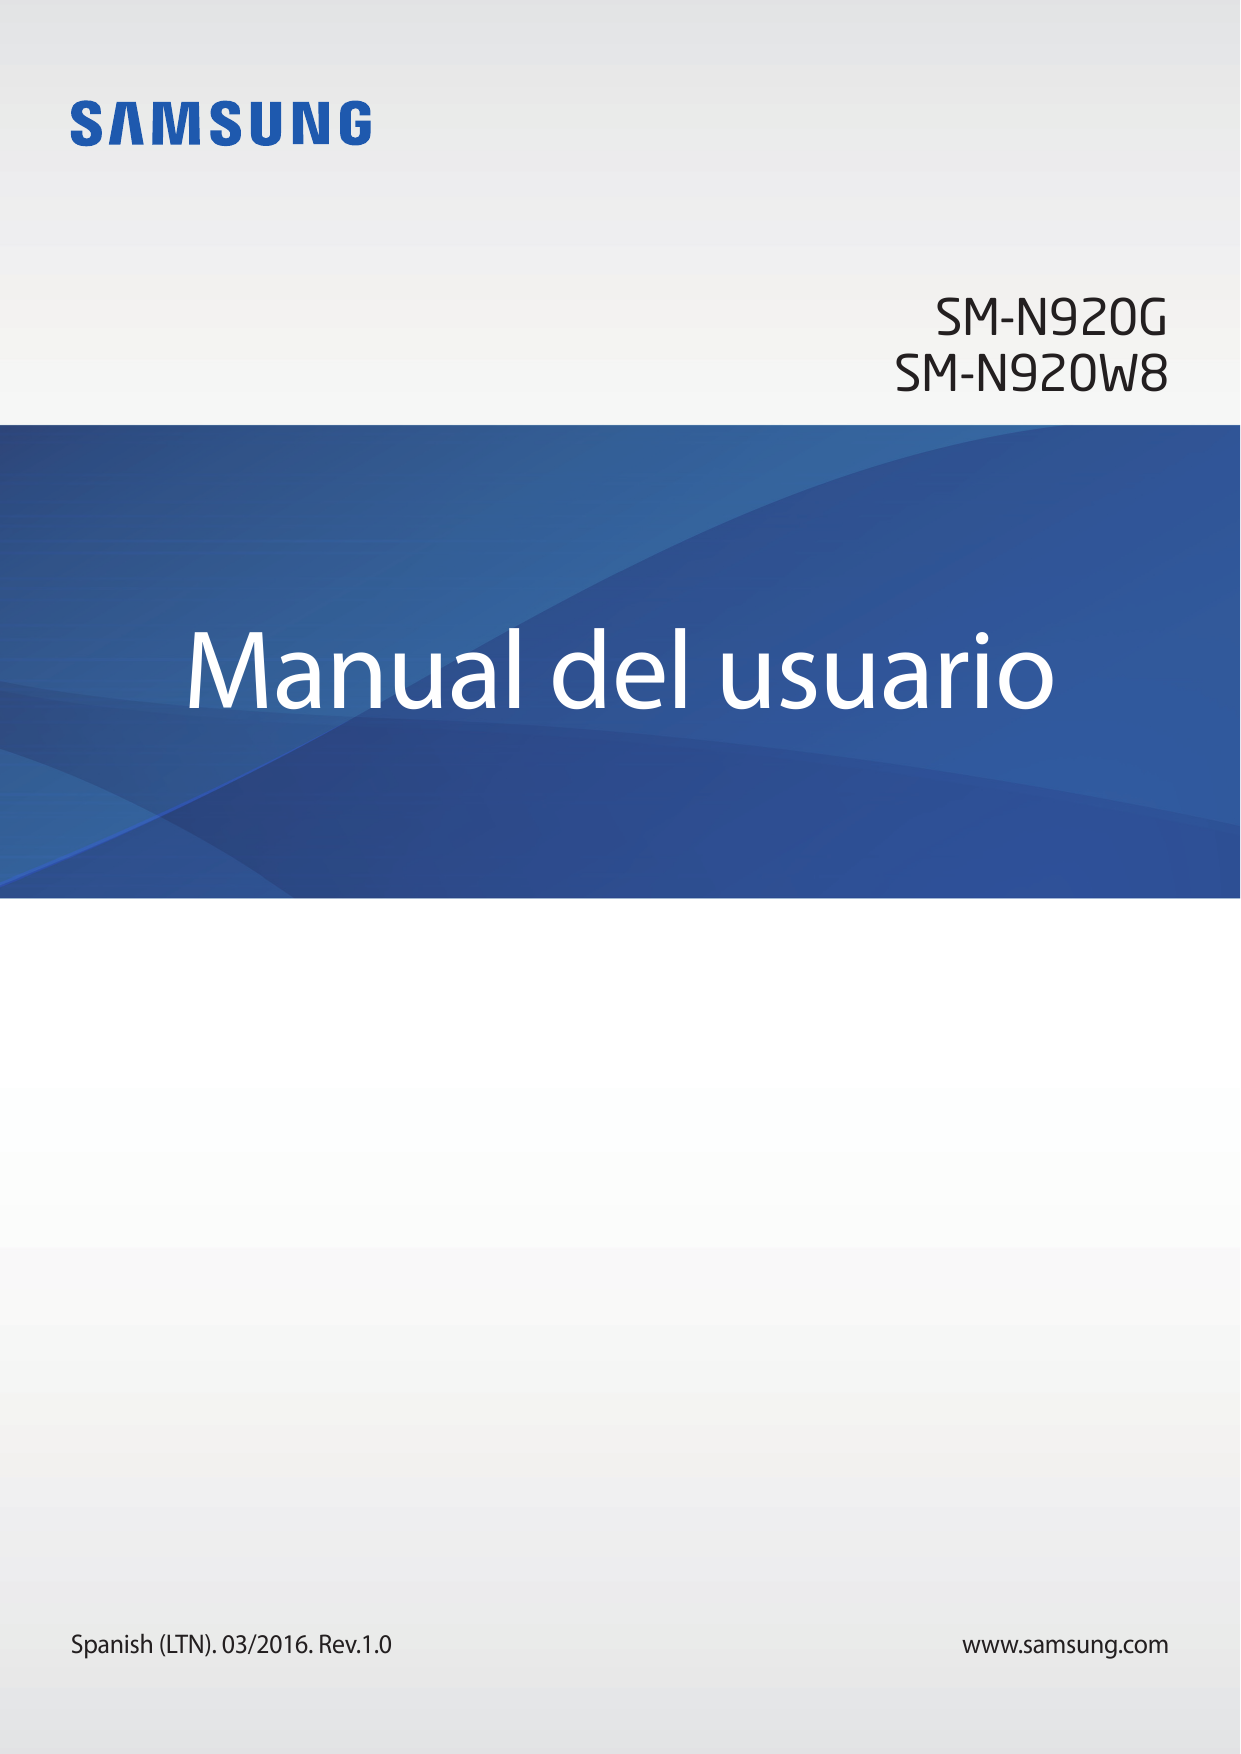 SM-N920GSM-N920W8Manual del usuarioSpanish (LTN). 03/2016. Rev.1.0www.samsung.com